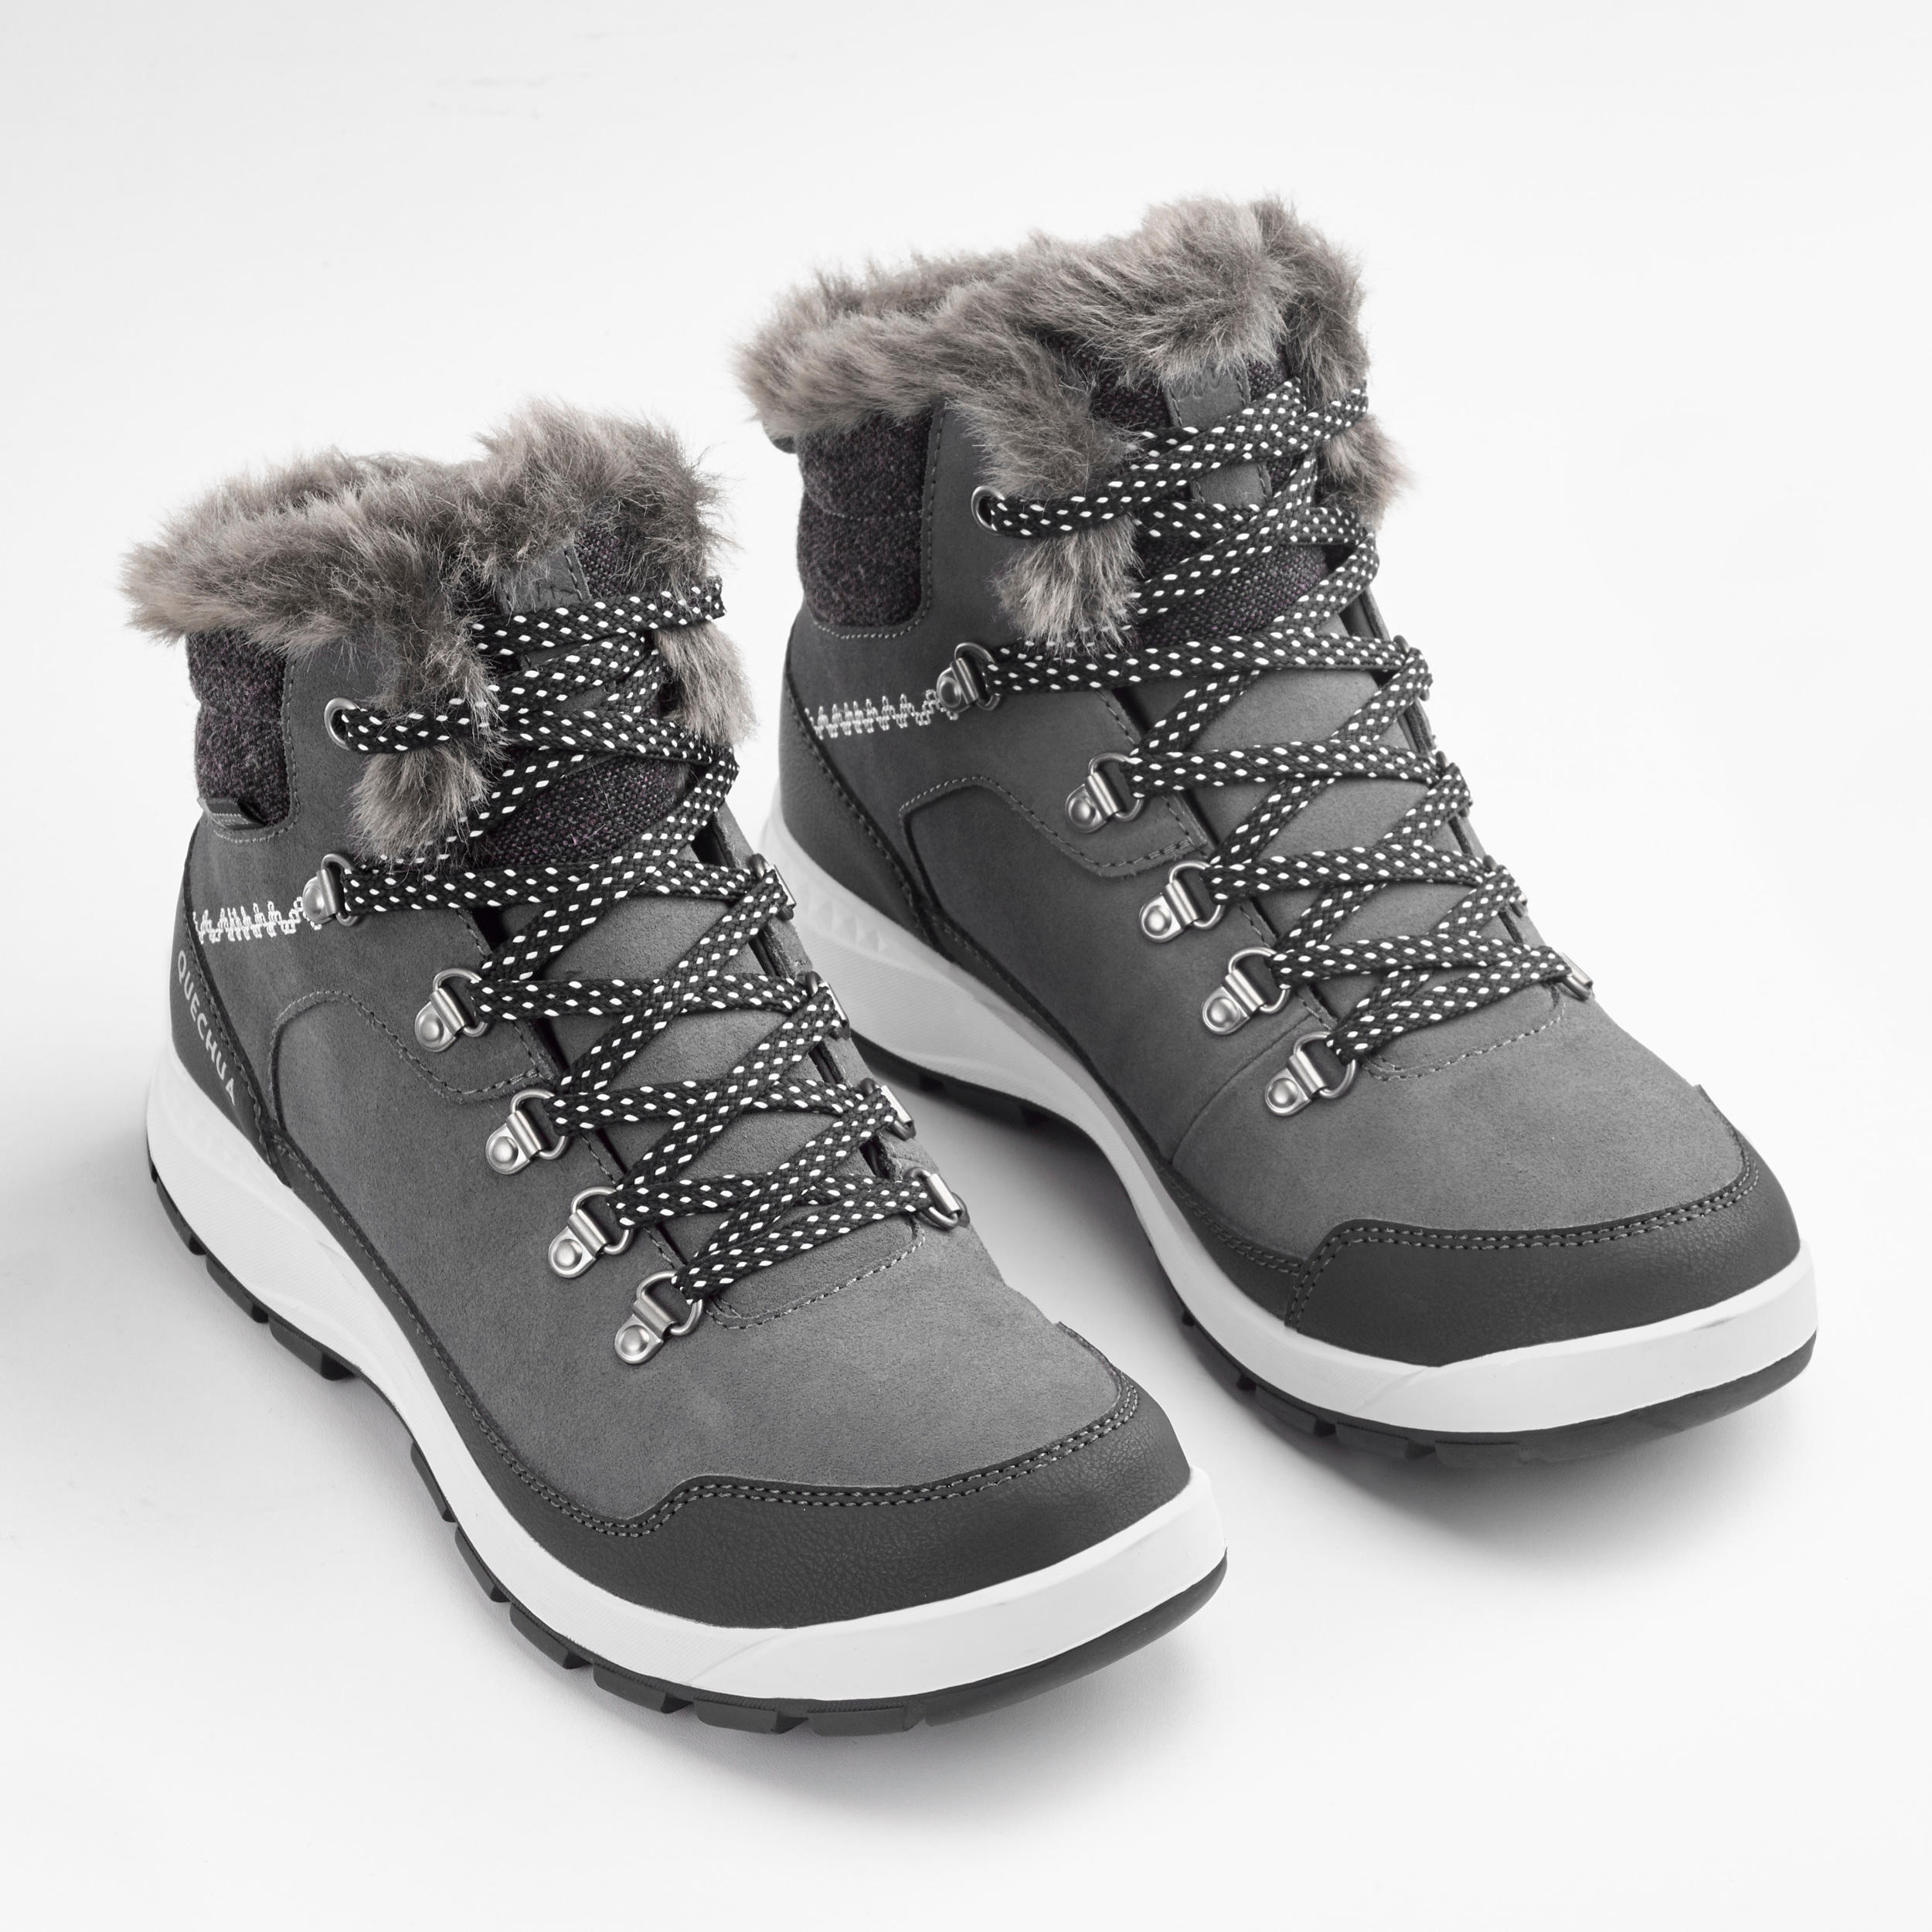 Women’s Winter Boots - SH 900 Mid Grey - QUECHUA